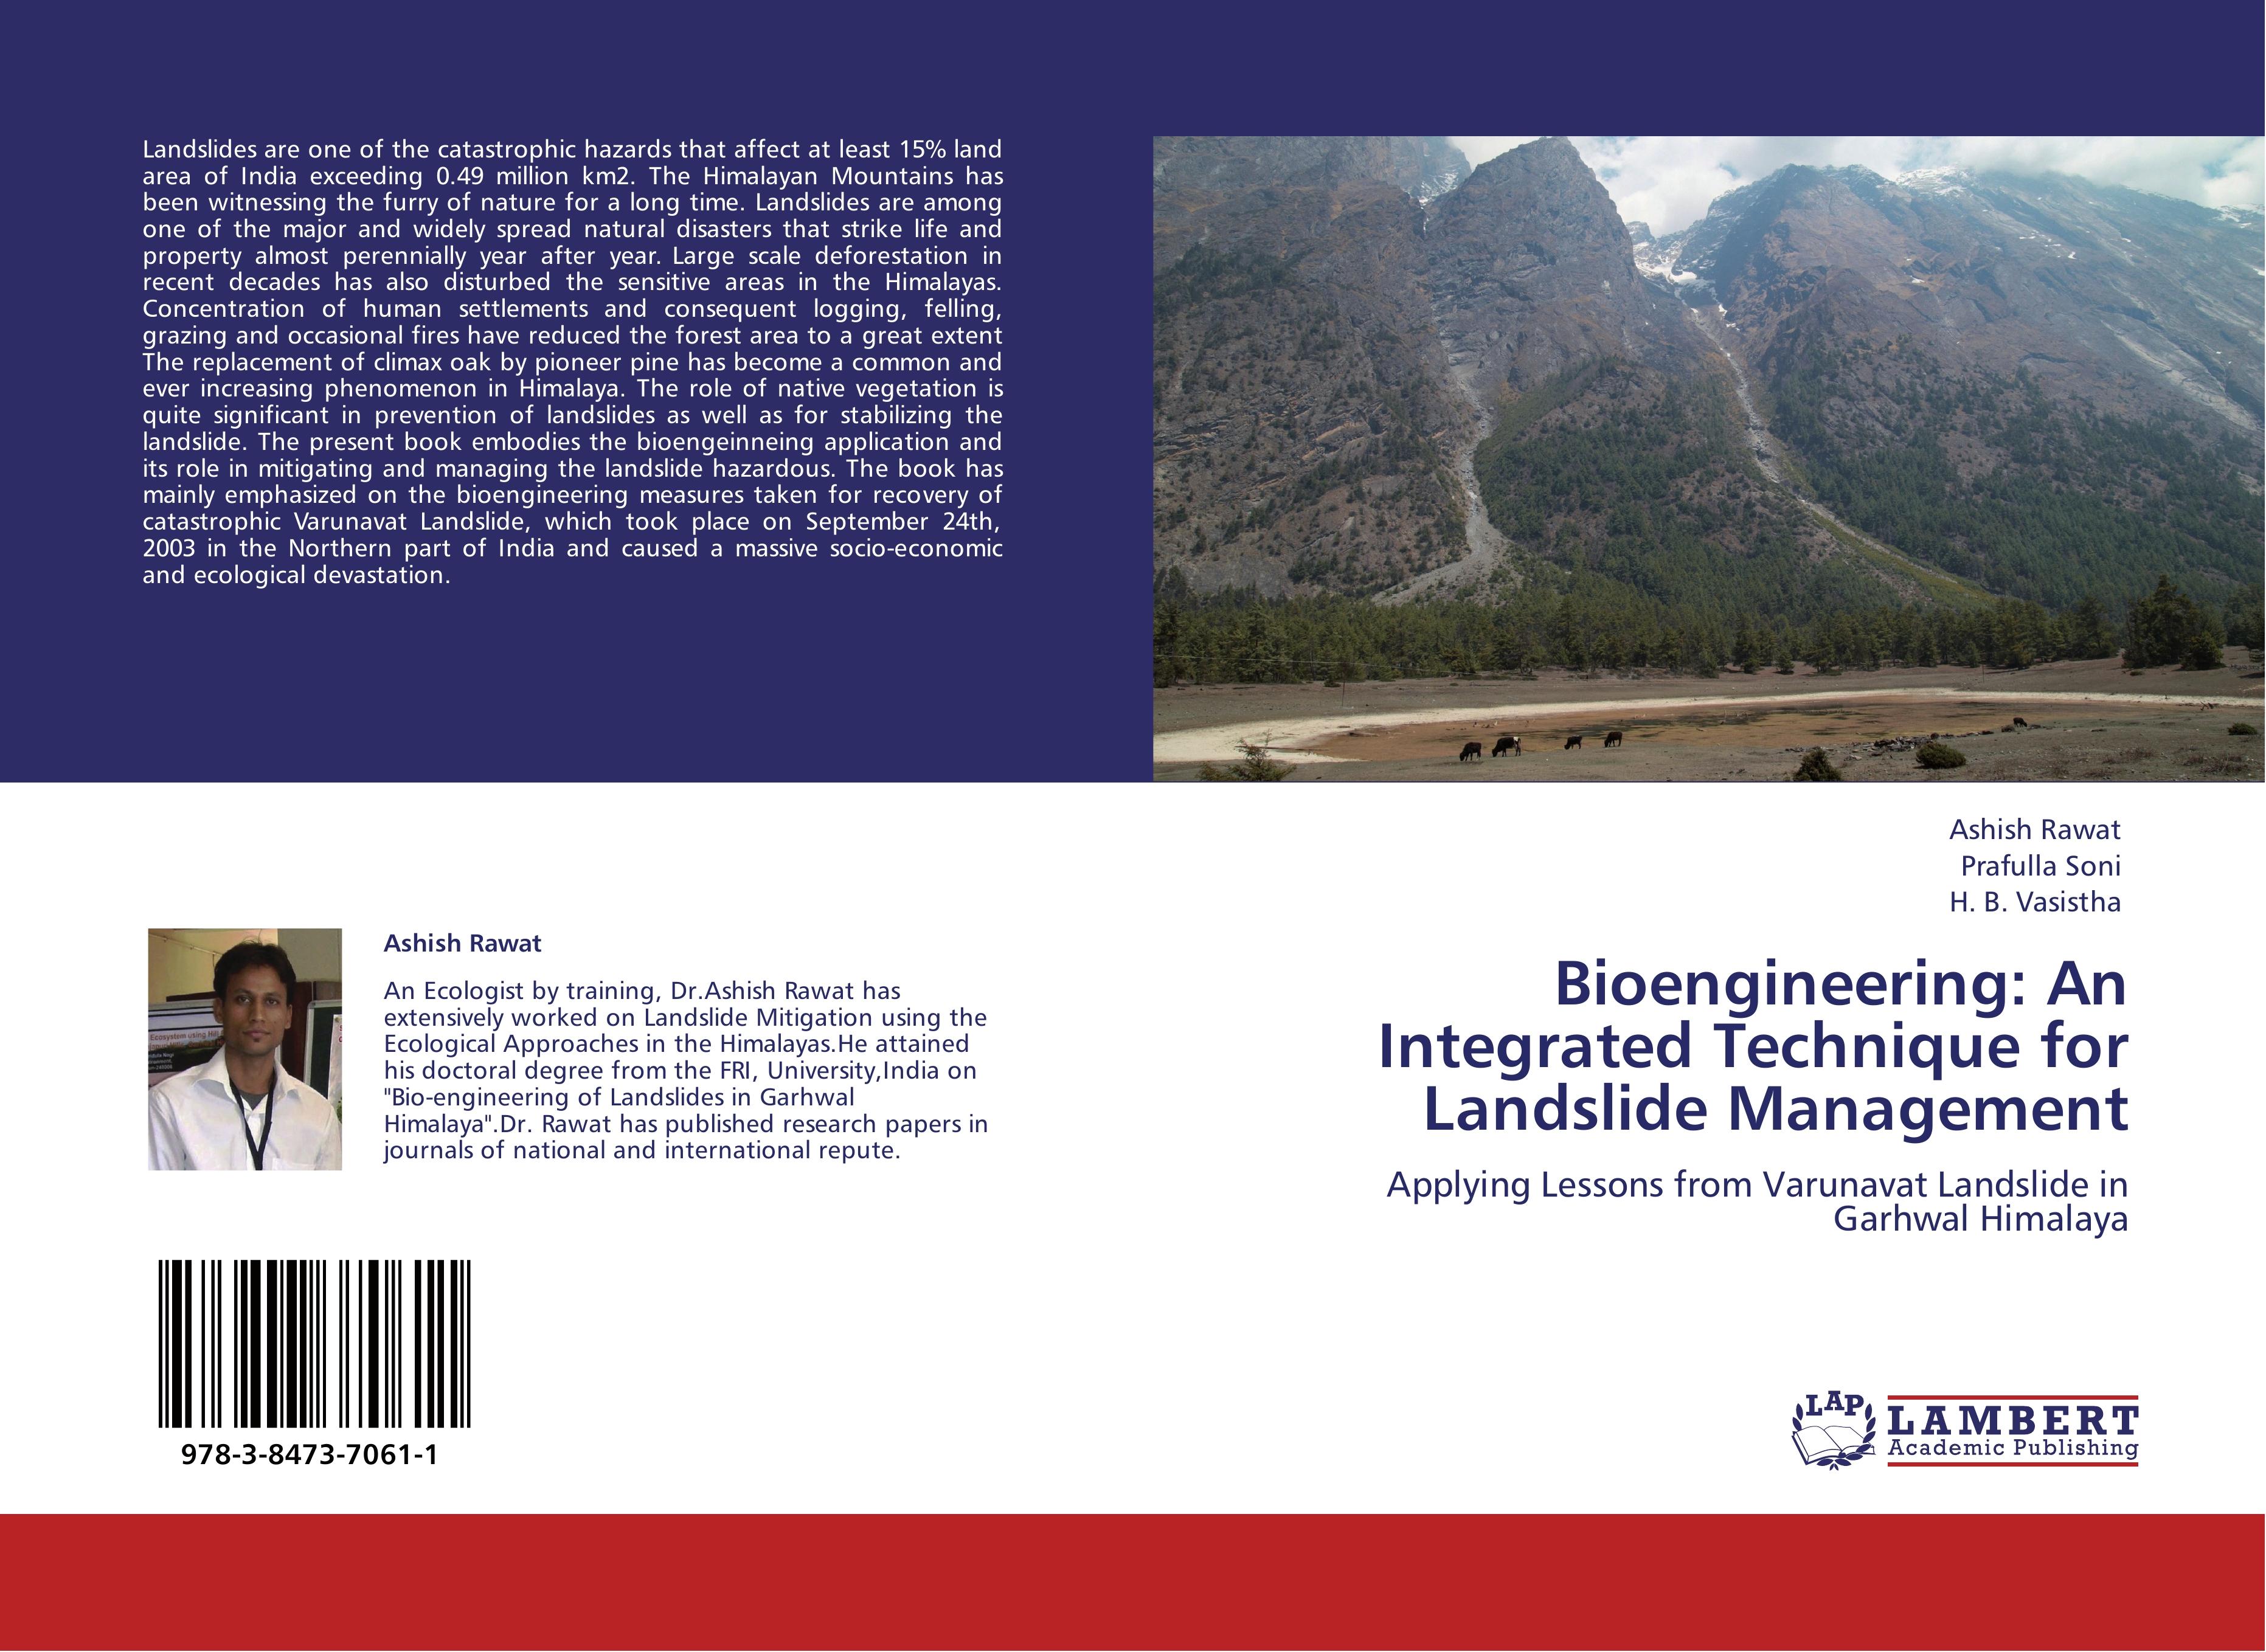 Bioengineering: An Integrated Technique for Landslide Management - Ashish Rawat Prafulla Soni H. B. Vasistha